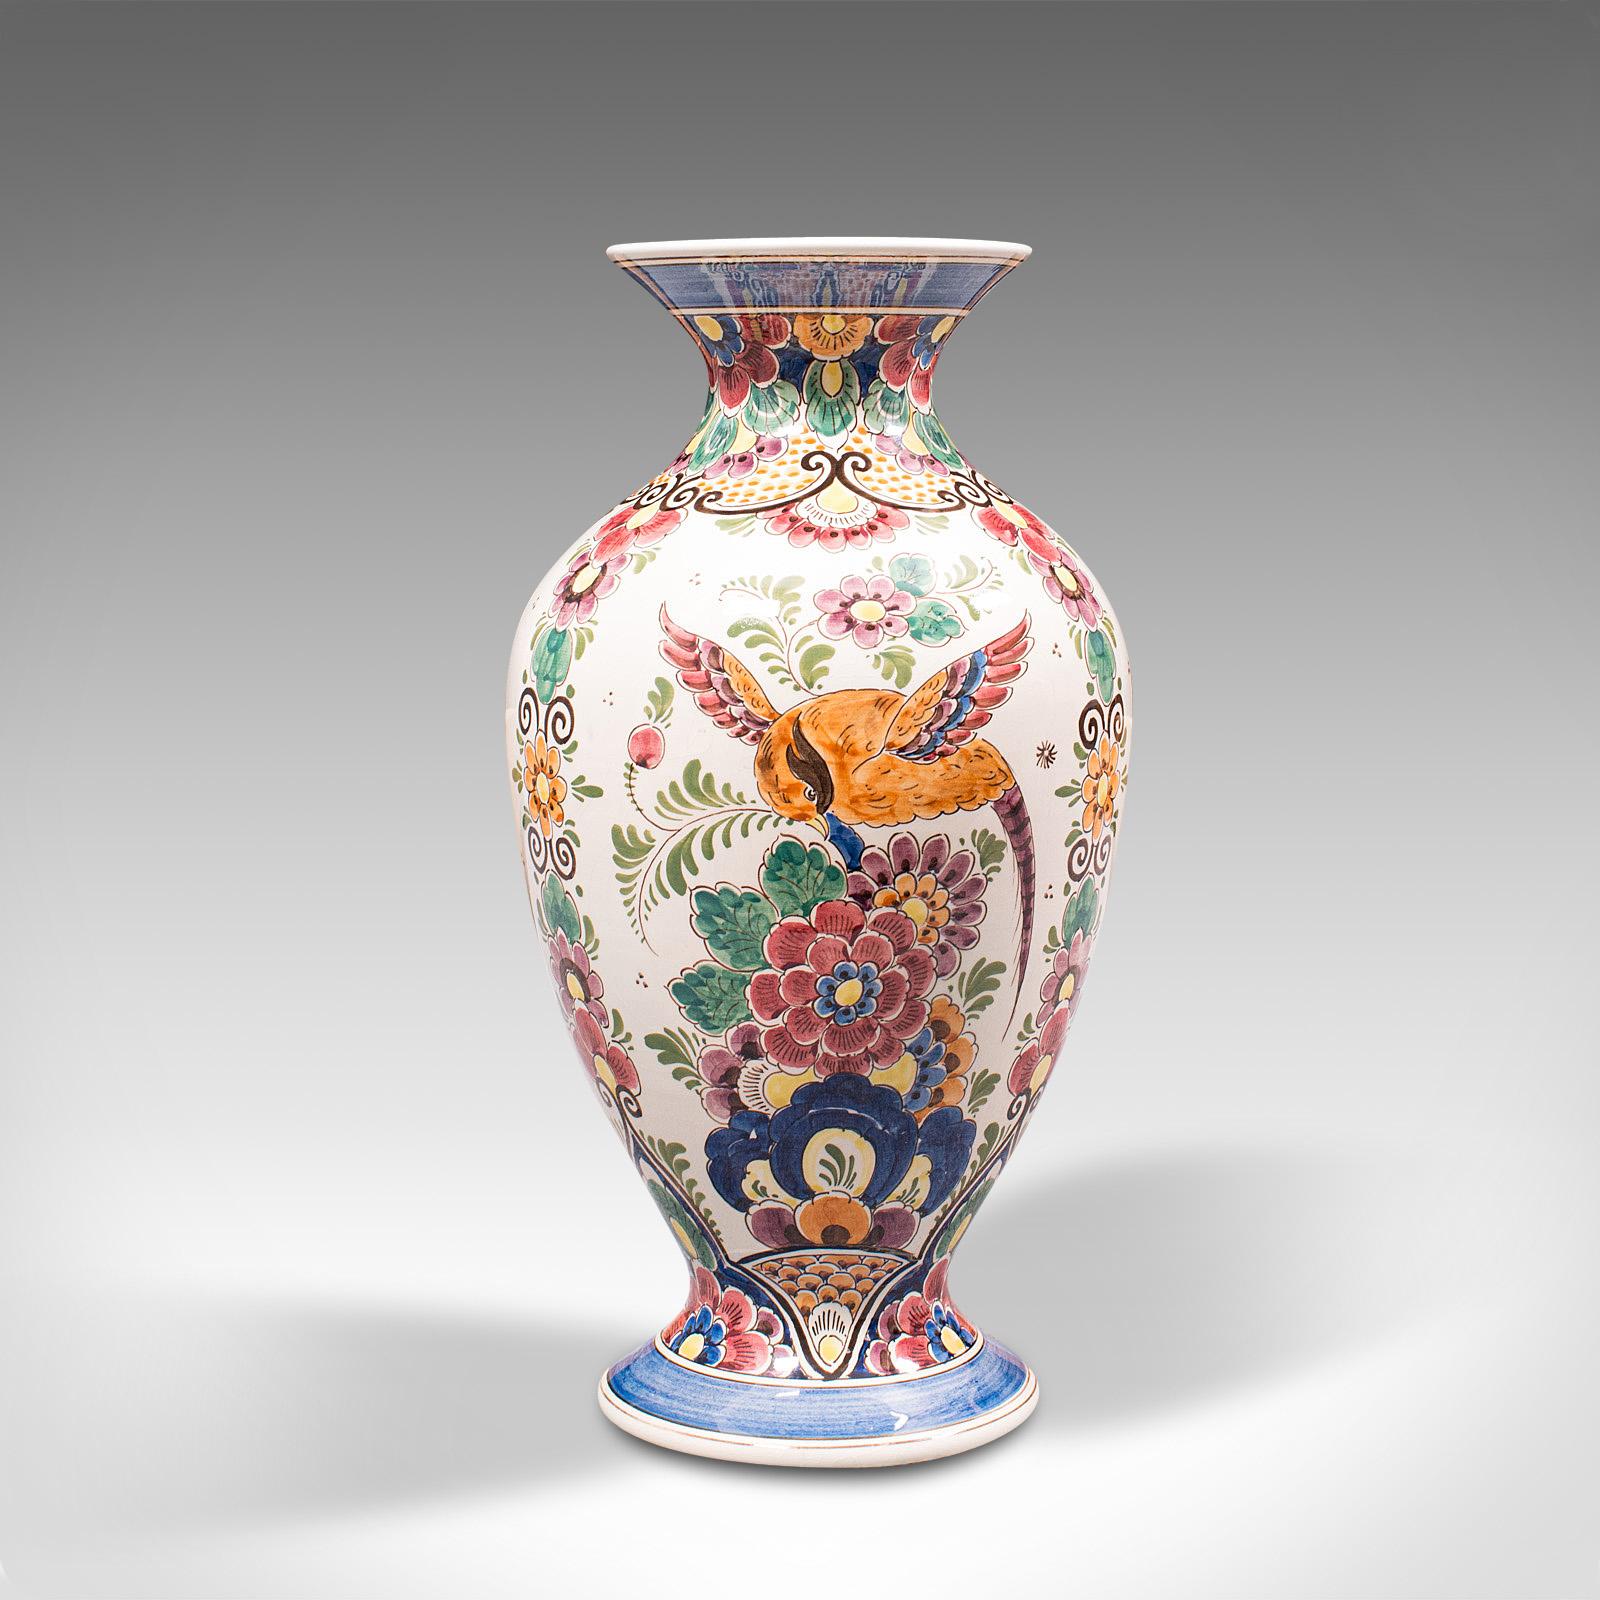 Vintage Polychromatic Vase, Dutch, Delft, Ceramic, Ornament, Mid 20th.C, C.1960 For Sale 2